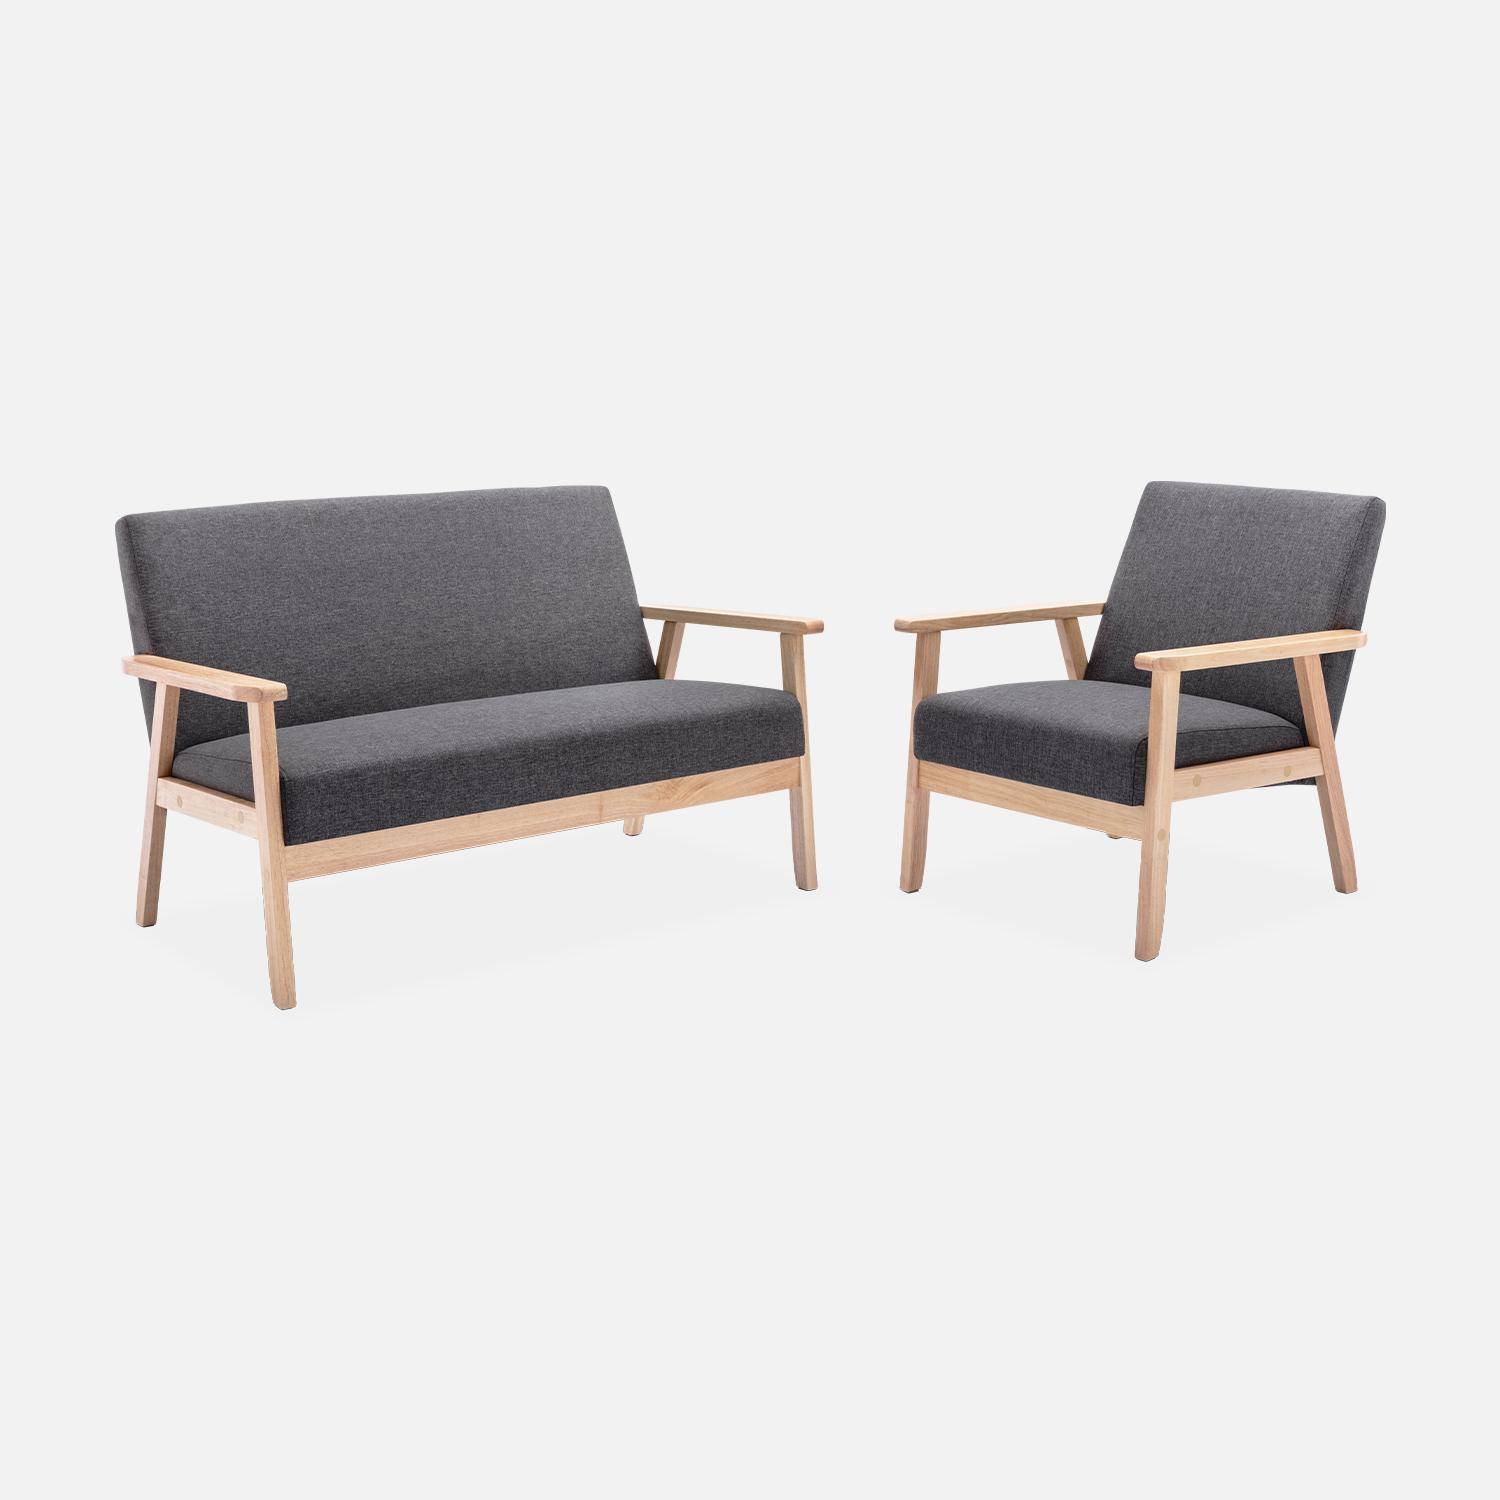 Banco y sillón de madera y tela gris oscuro, Isak, L 114 x A 69,5 x A 73 cm Photo2